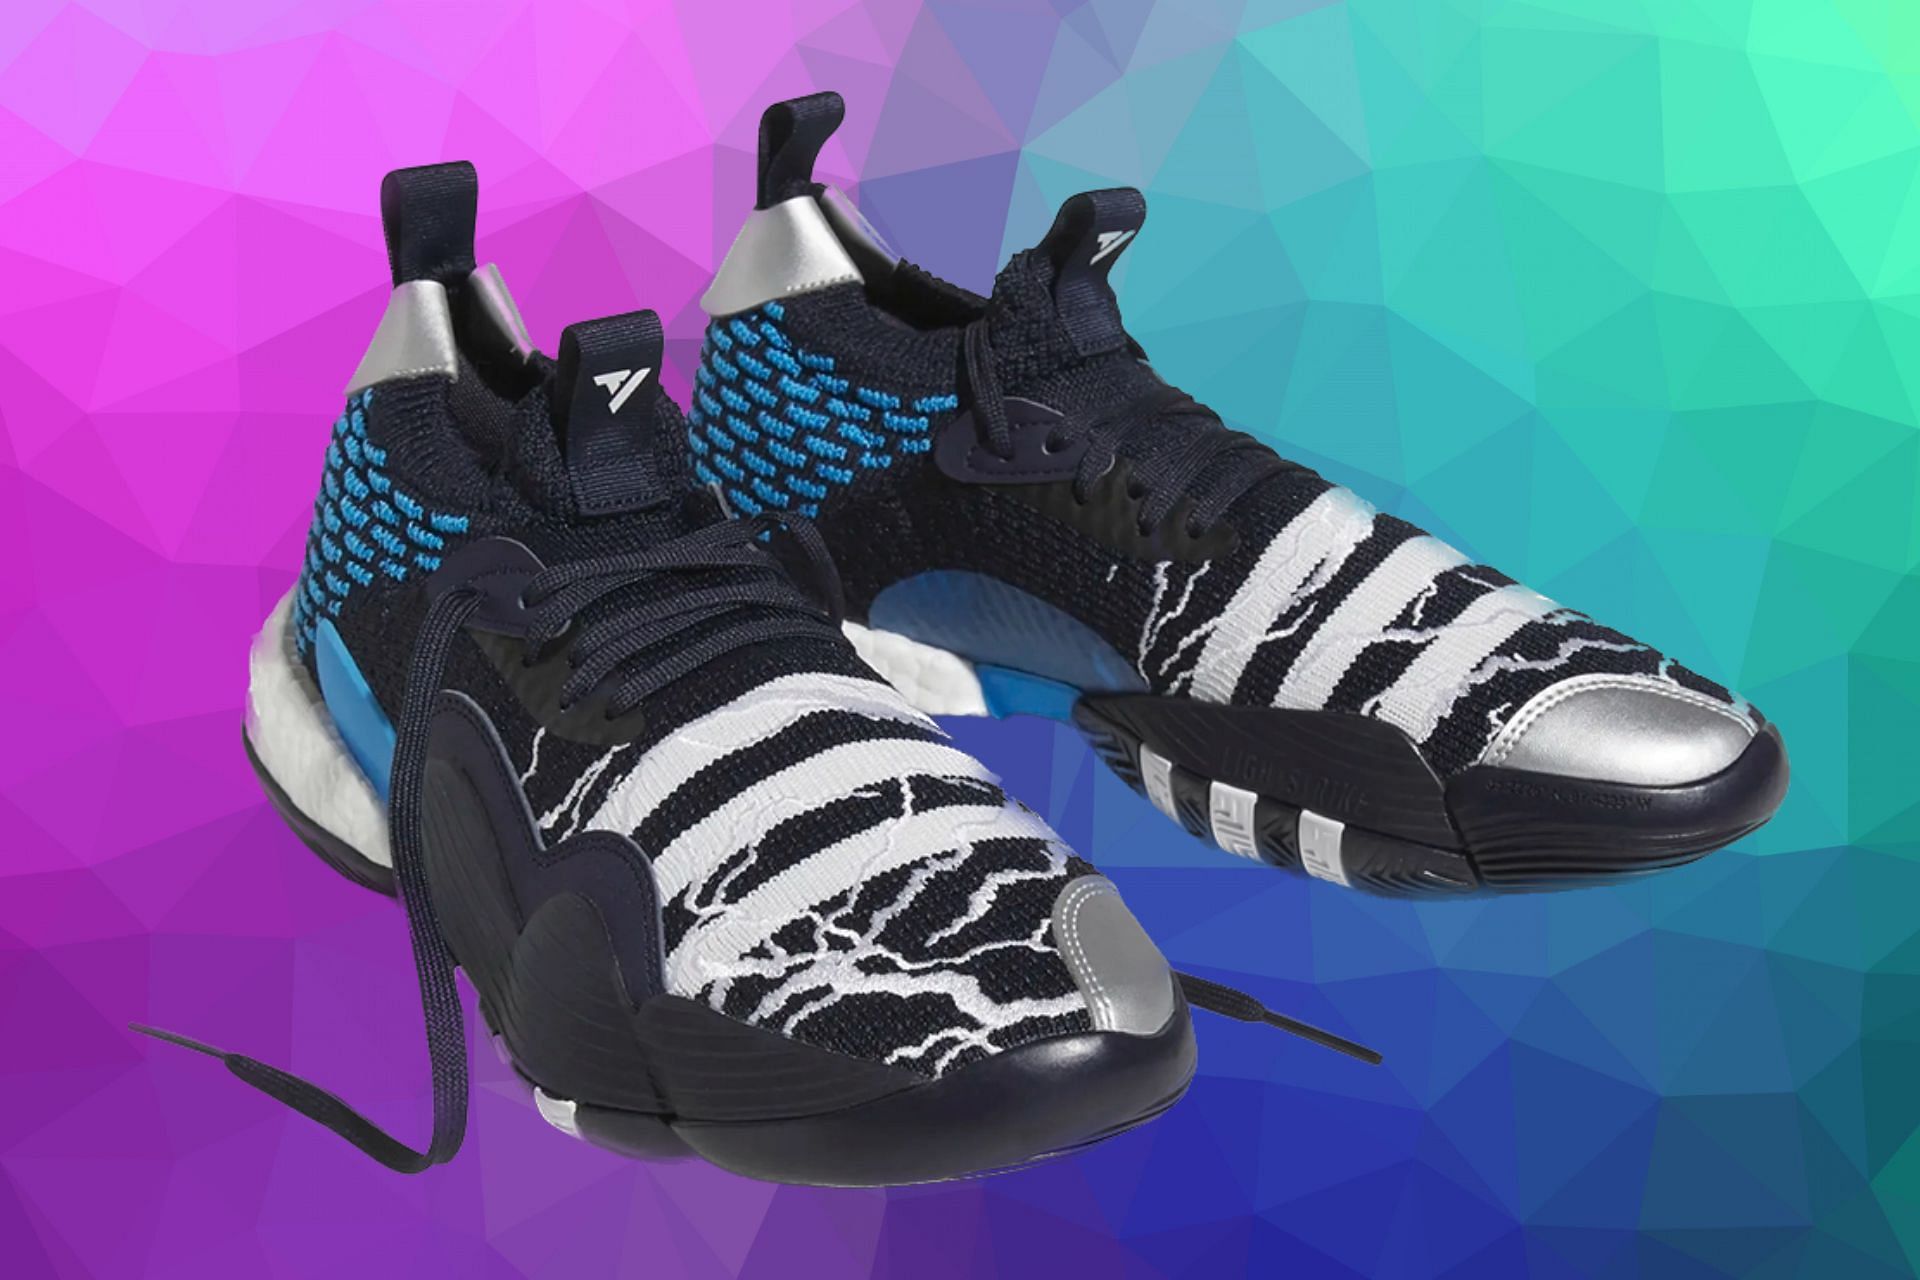 Adidas Trae Young 2 Lightning shoes (Image via Adidas)